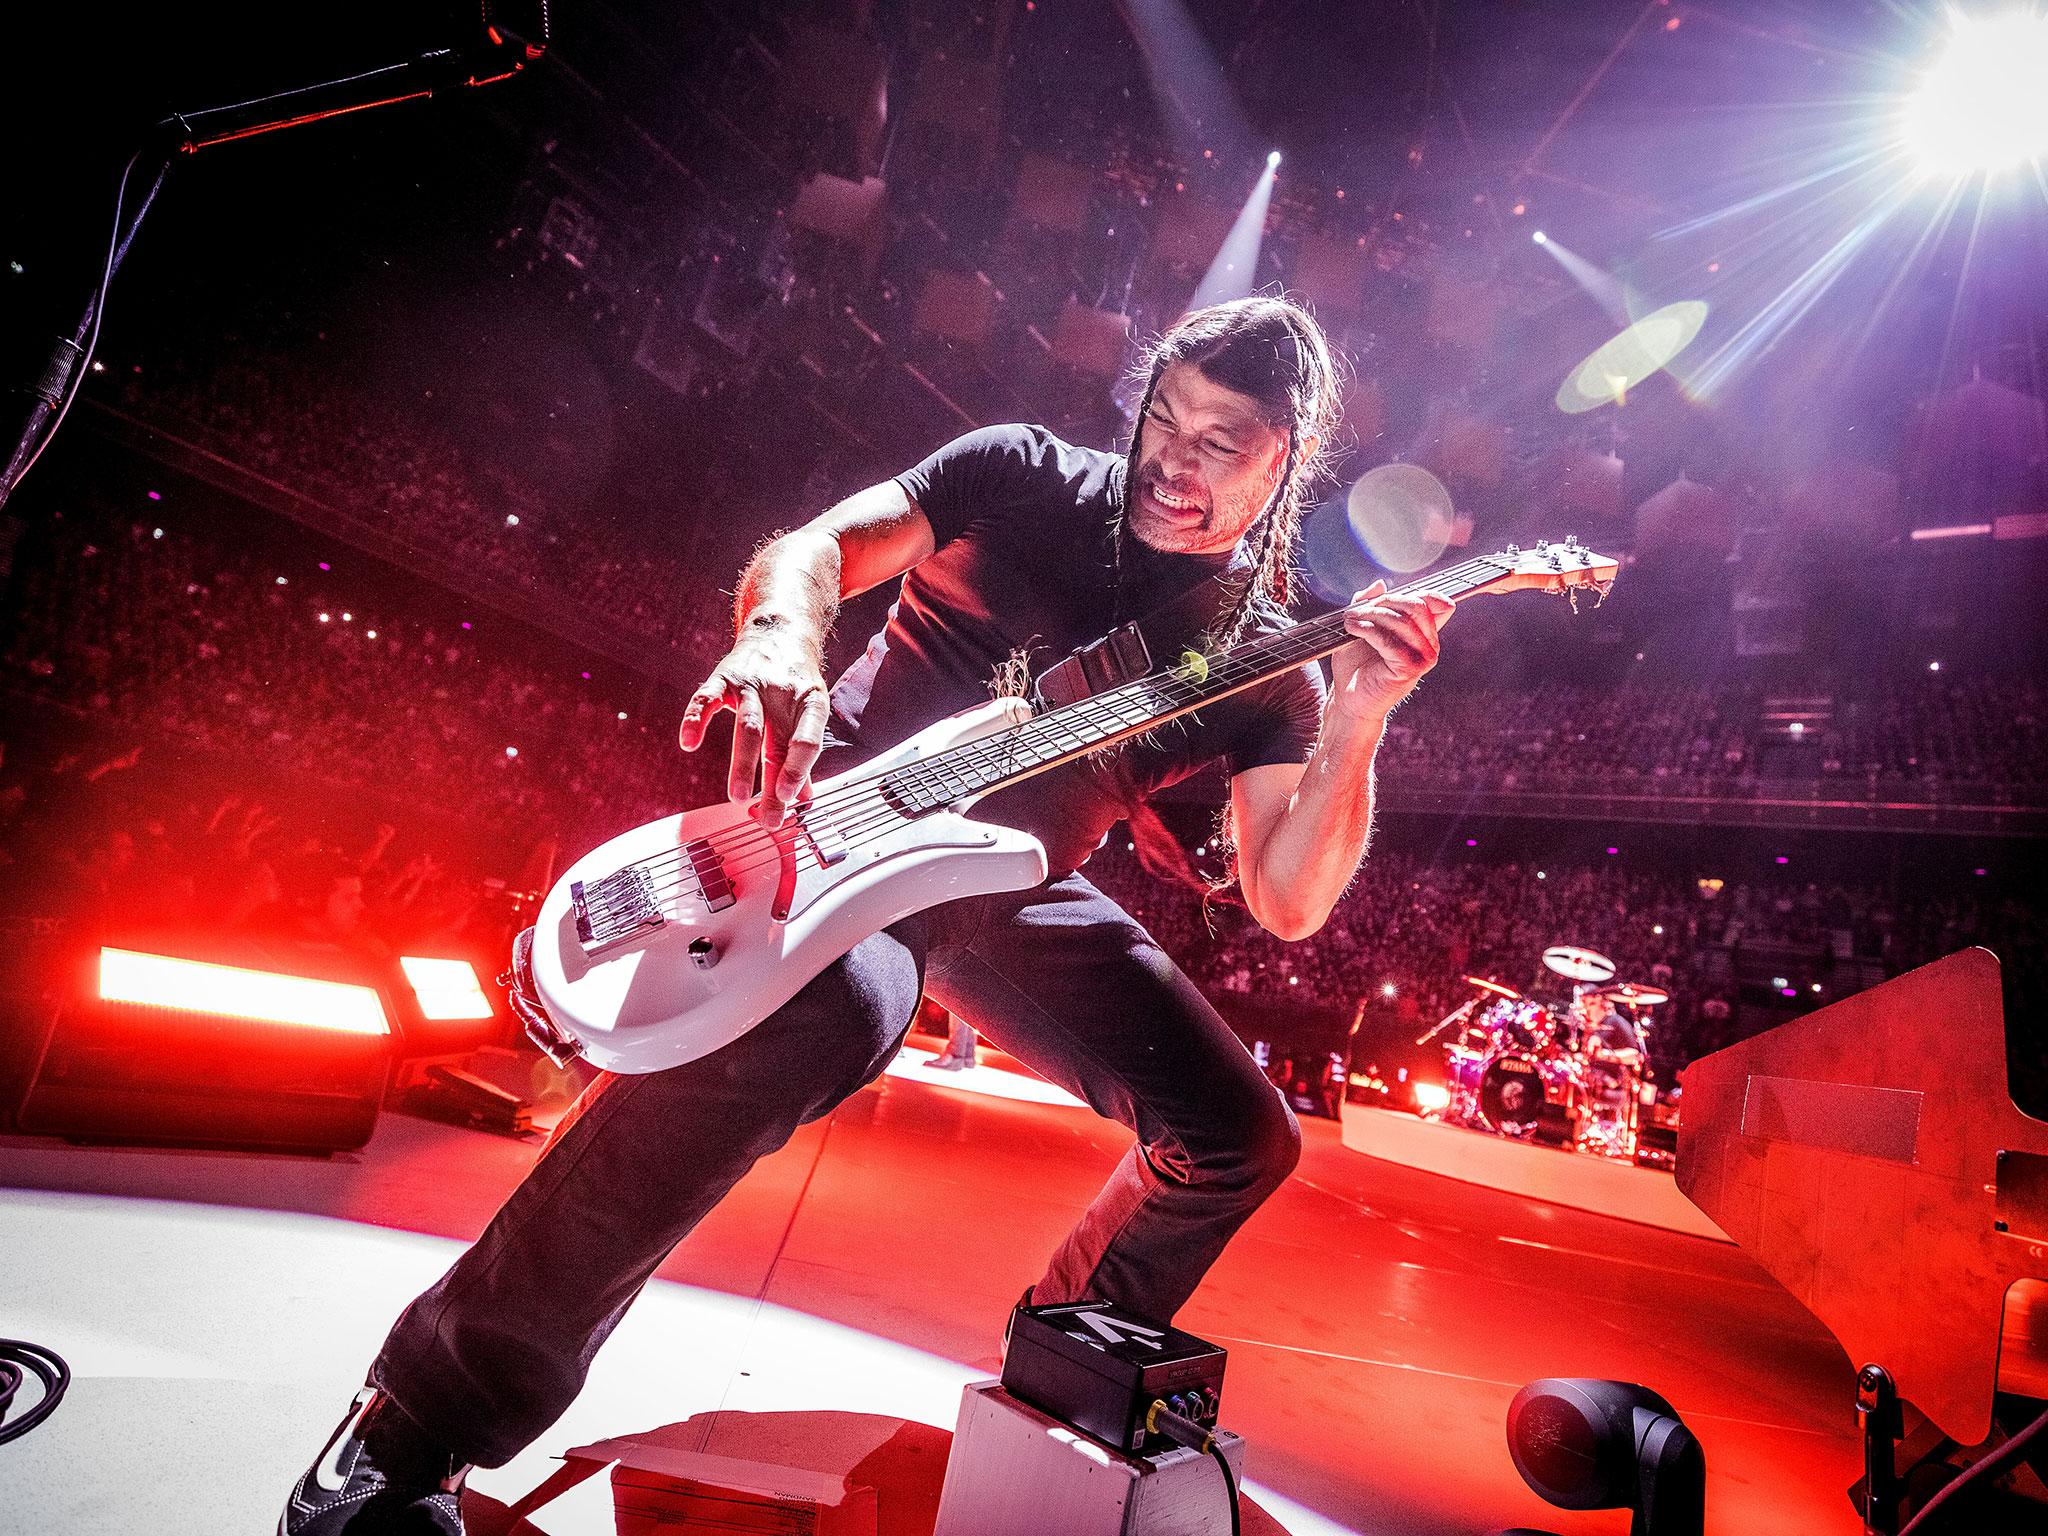 Metallica bassist Robert Trujillo performs with zeal at the Ziggo Dome in Amsterdam